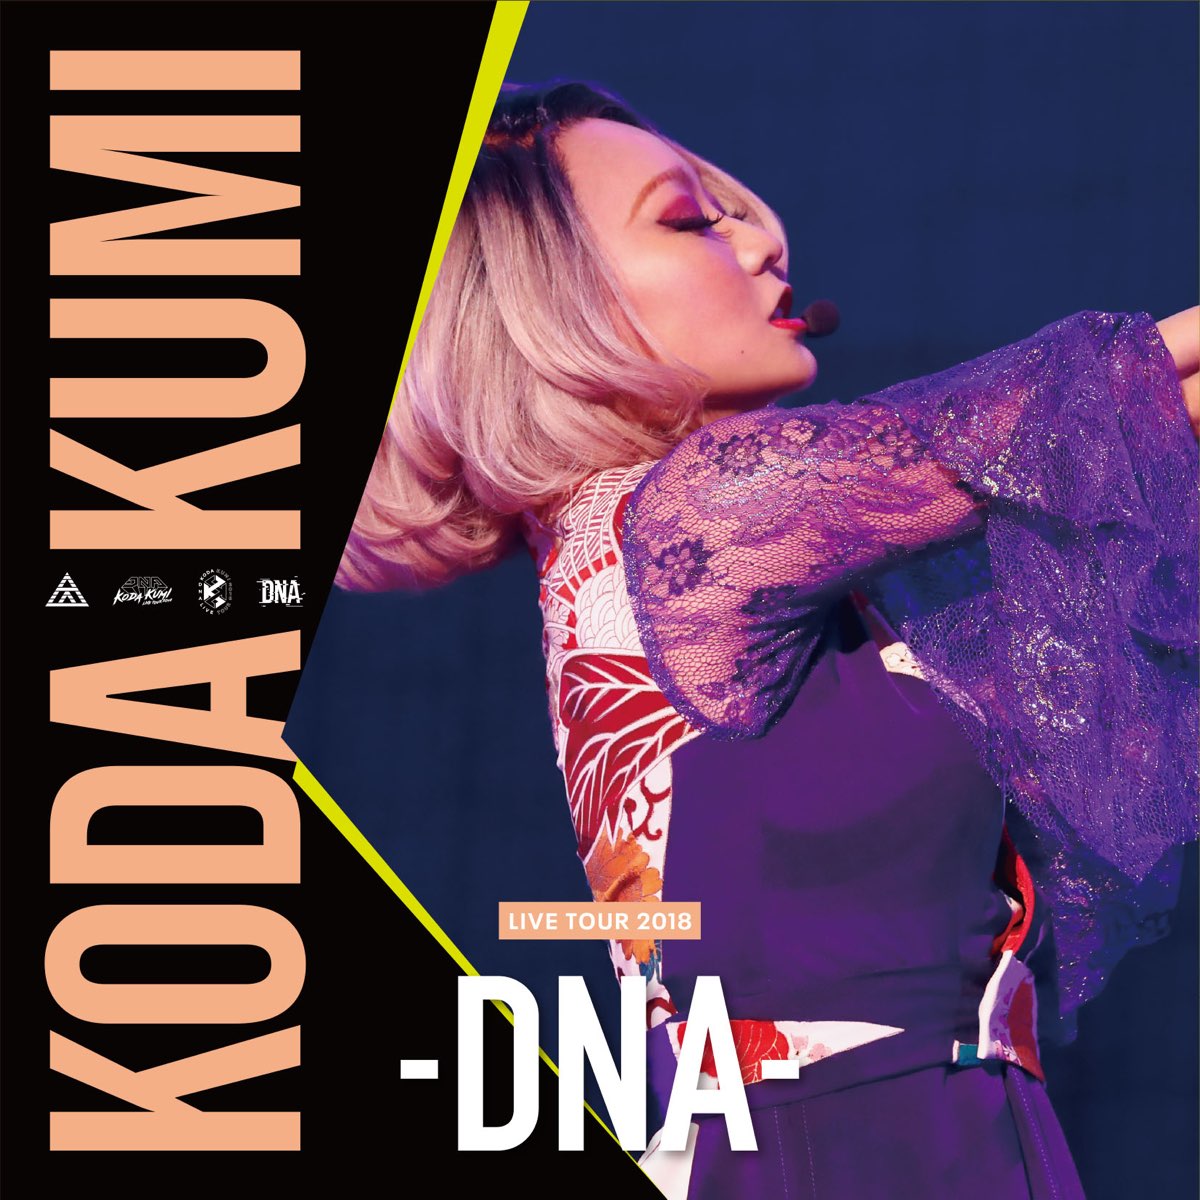 Koda Kumi Live Tour 18 Dna By Kumi Koda On Apple Music